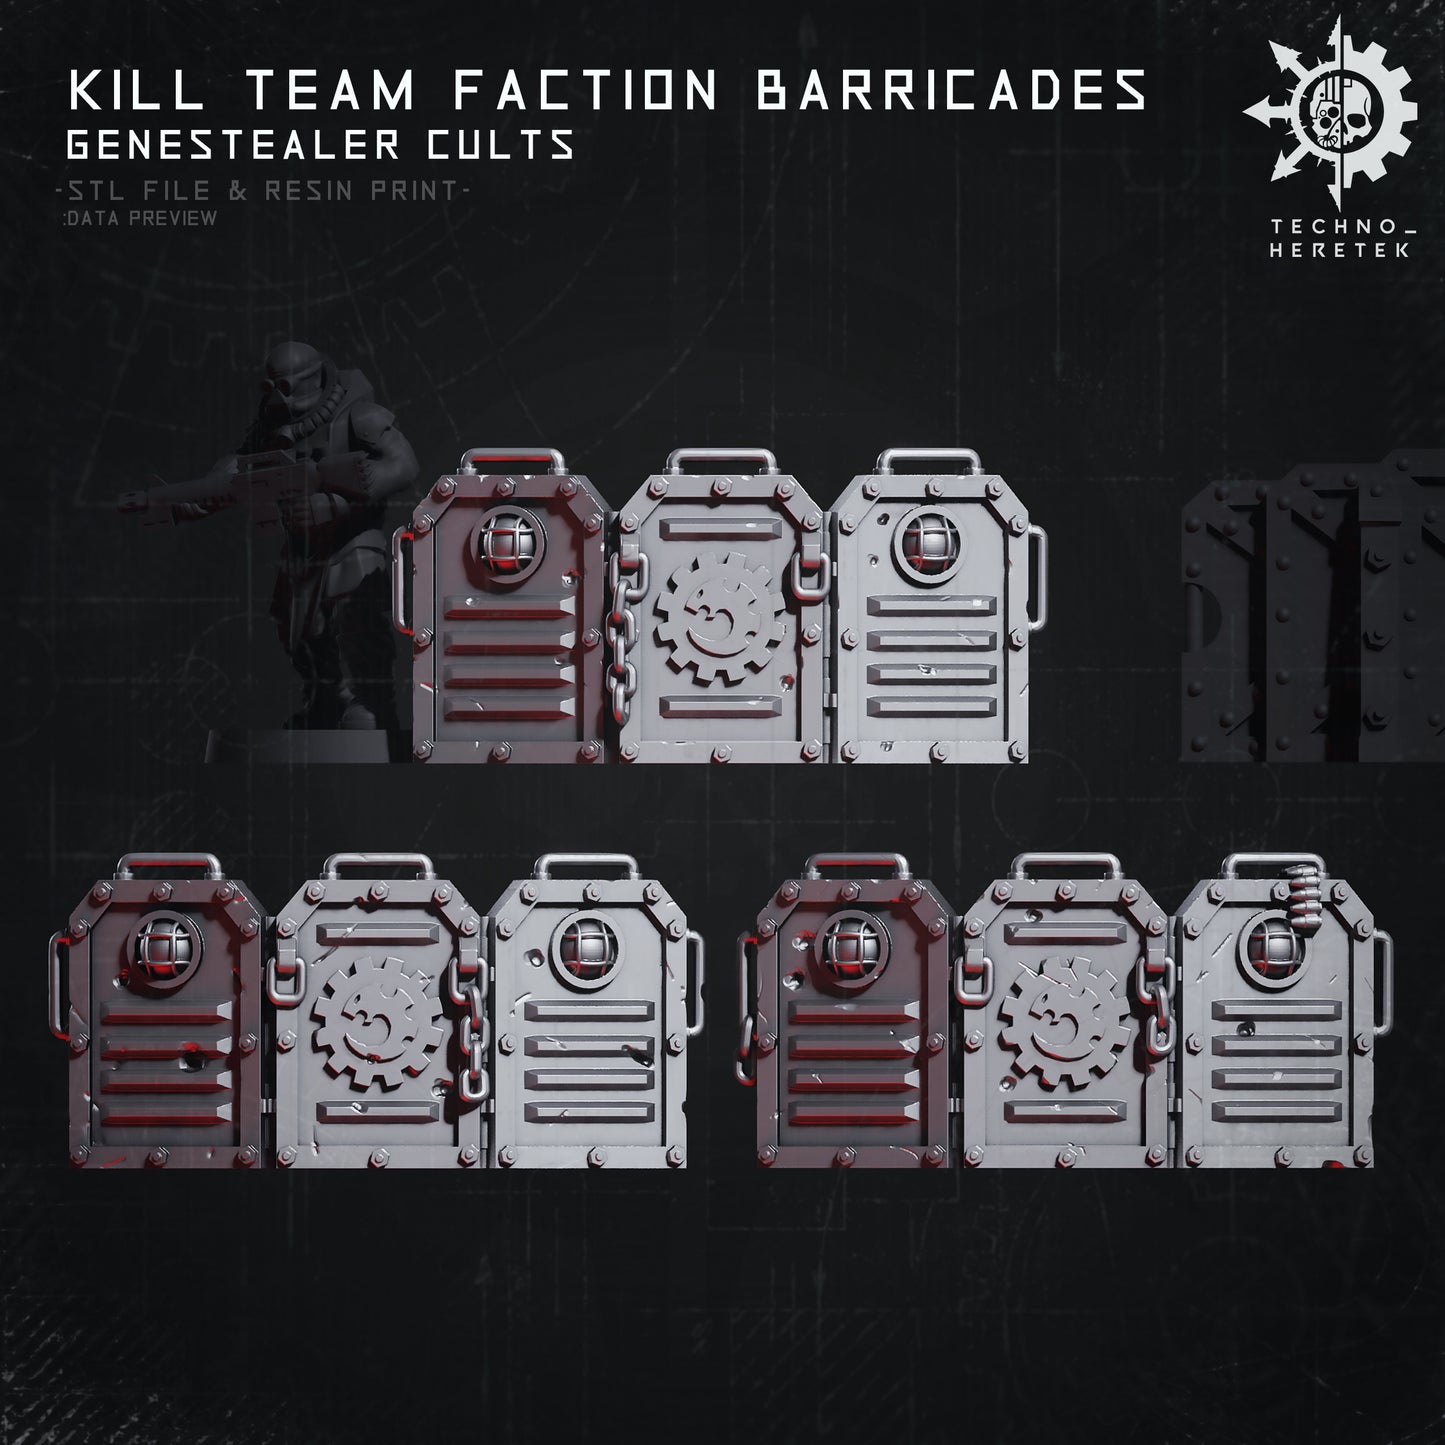 Genestealer Cults Faction Barricade for Kill team - STL File Pack